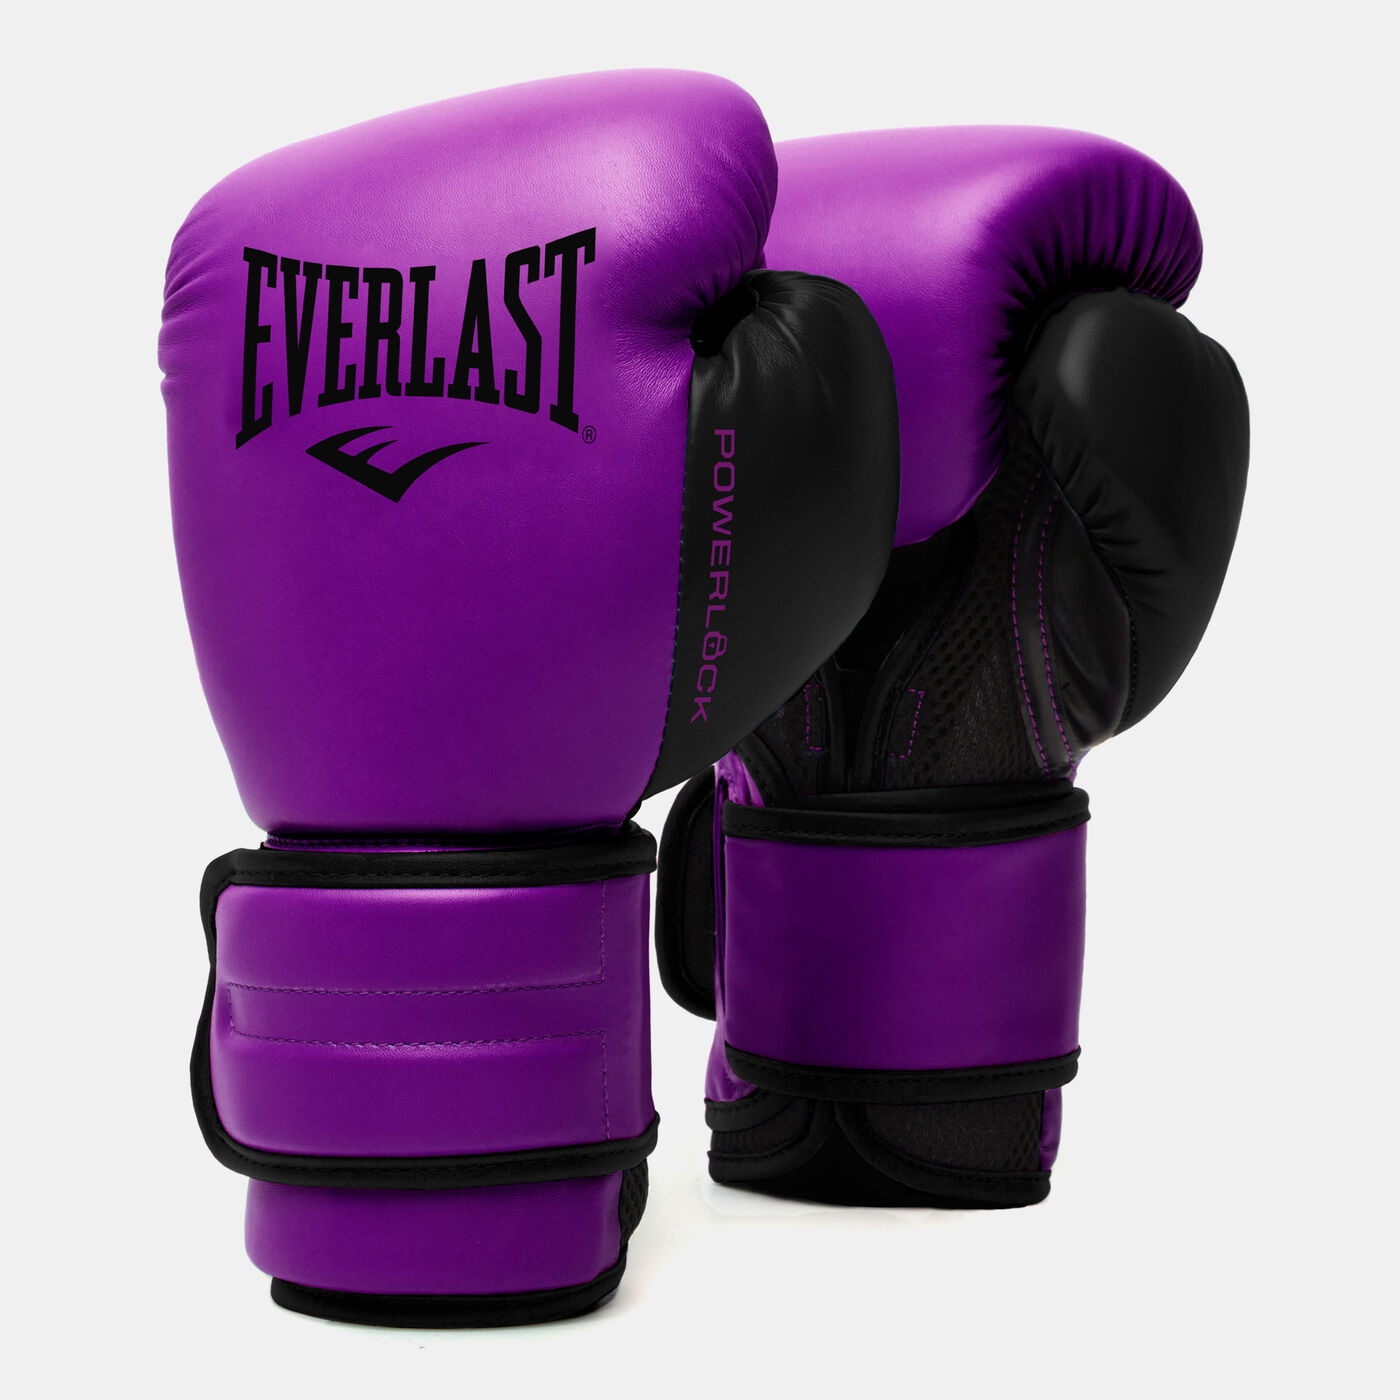 Powerlock 2 Training Boxing Gloves (16oz)